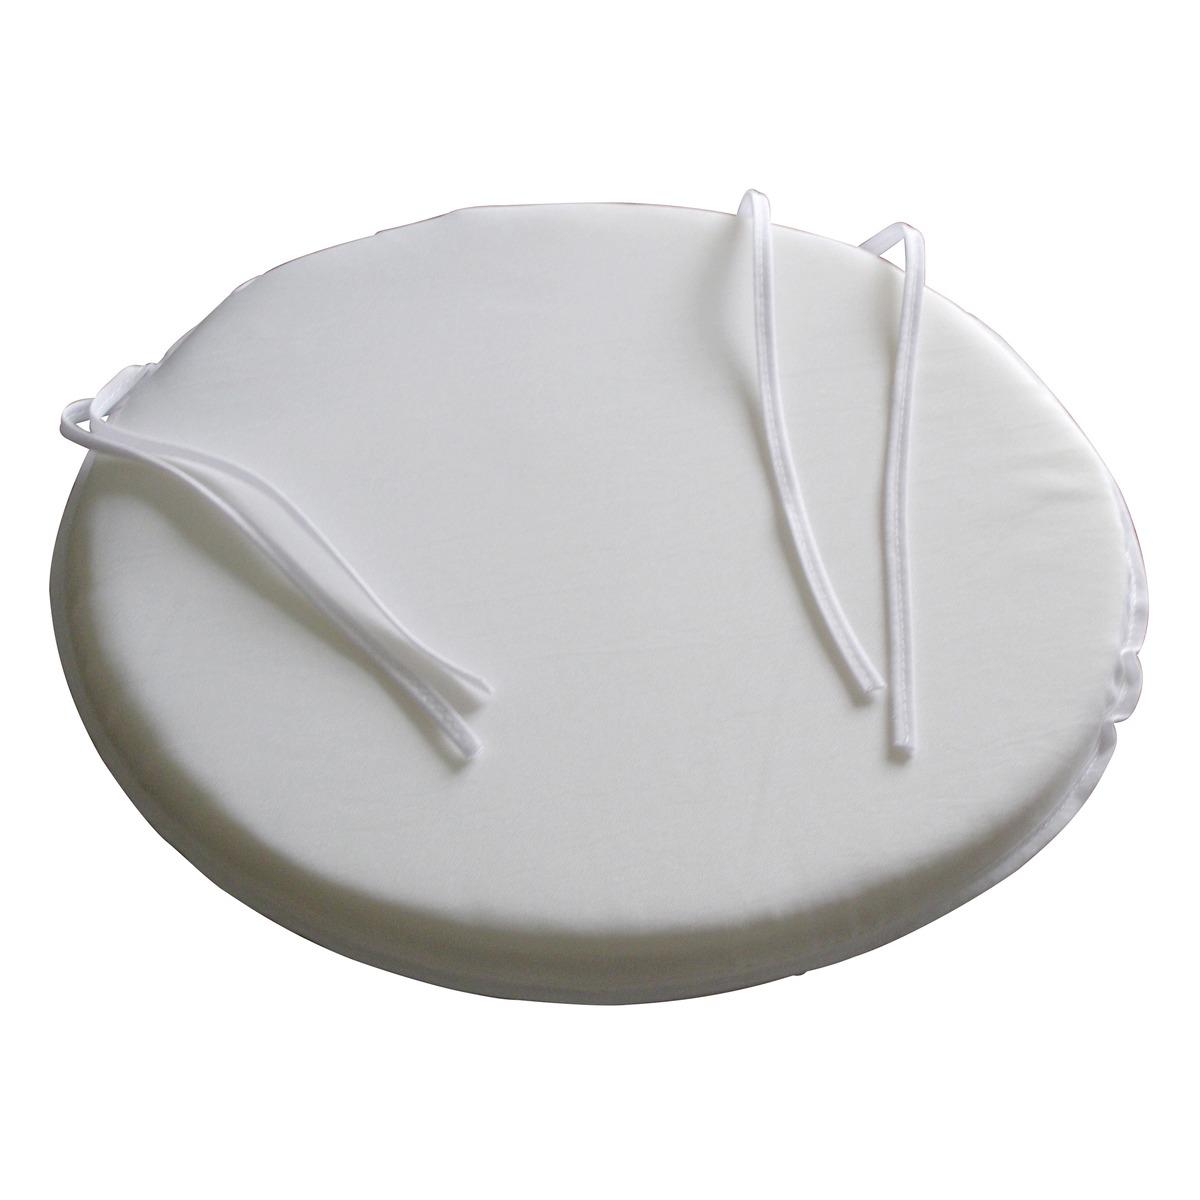 Galette de chaise 100% polyester - Diam. 38 cm - Blanc